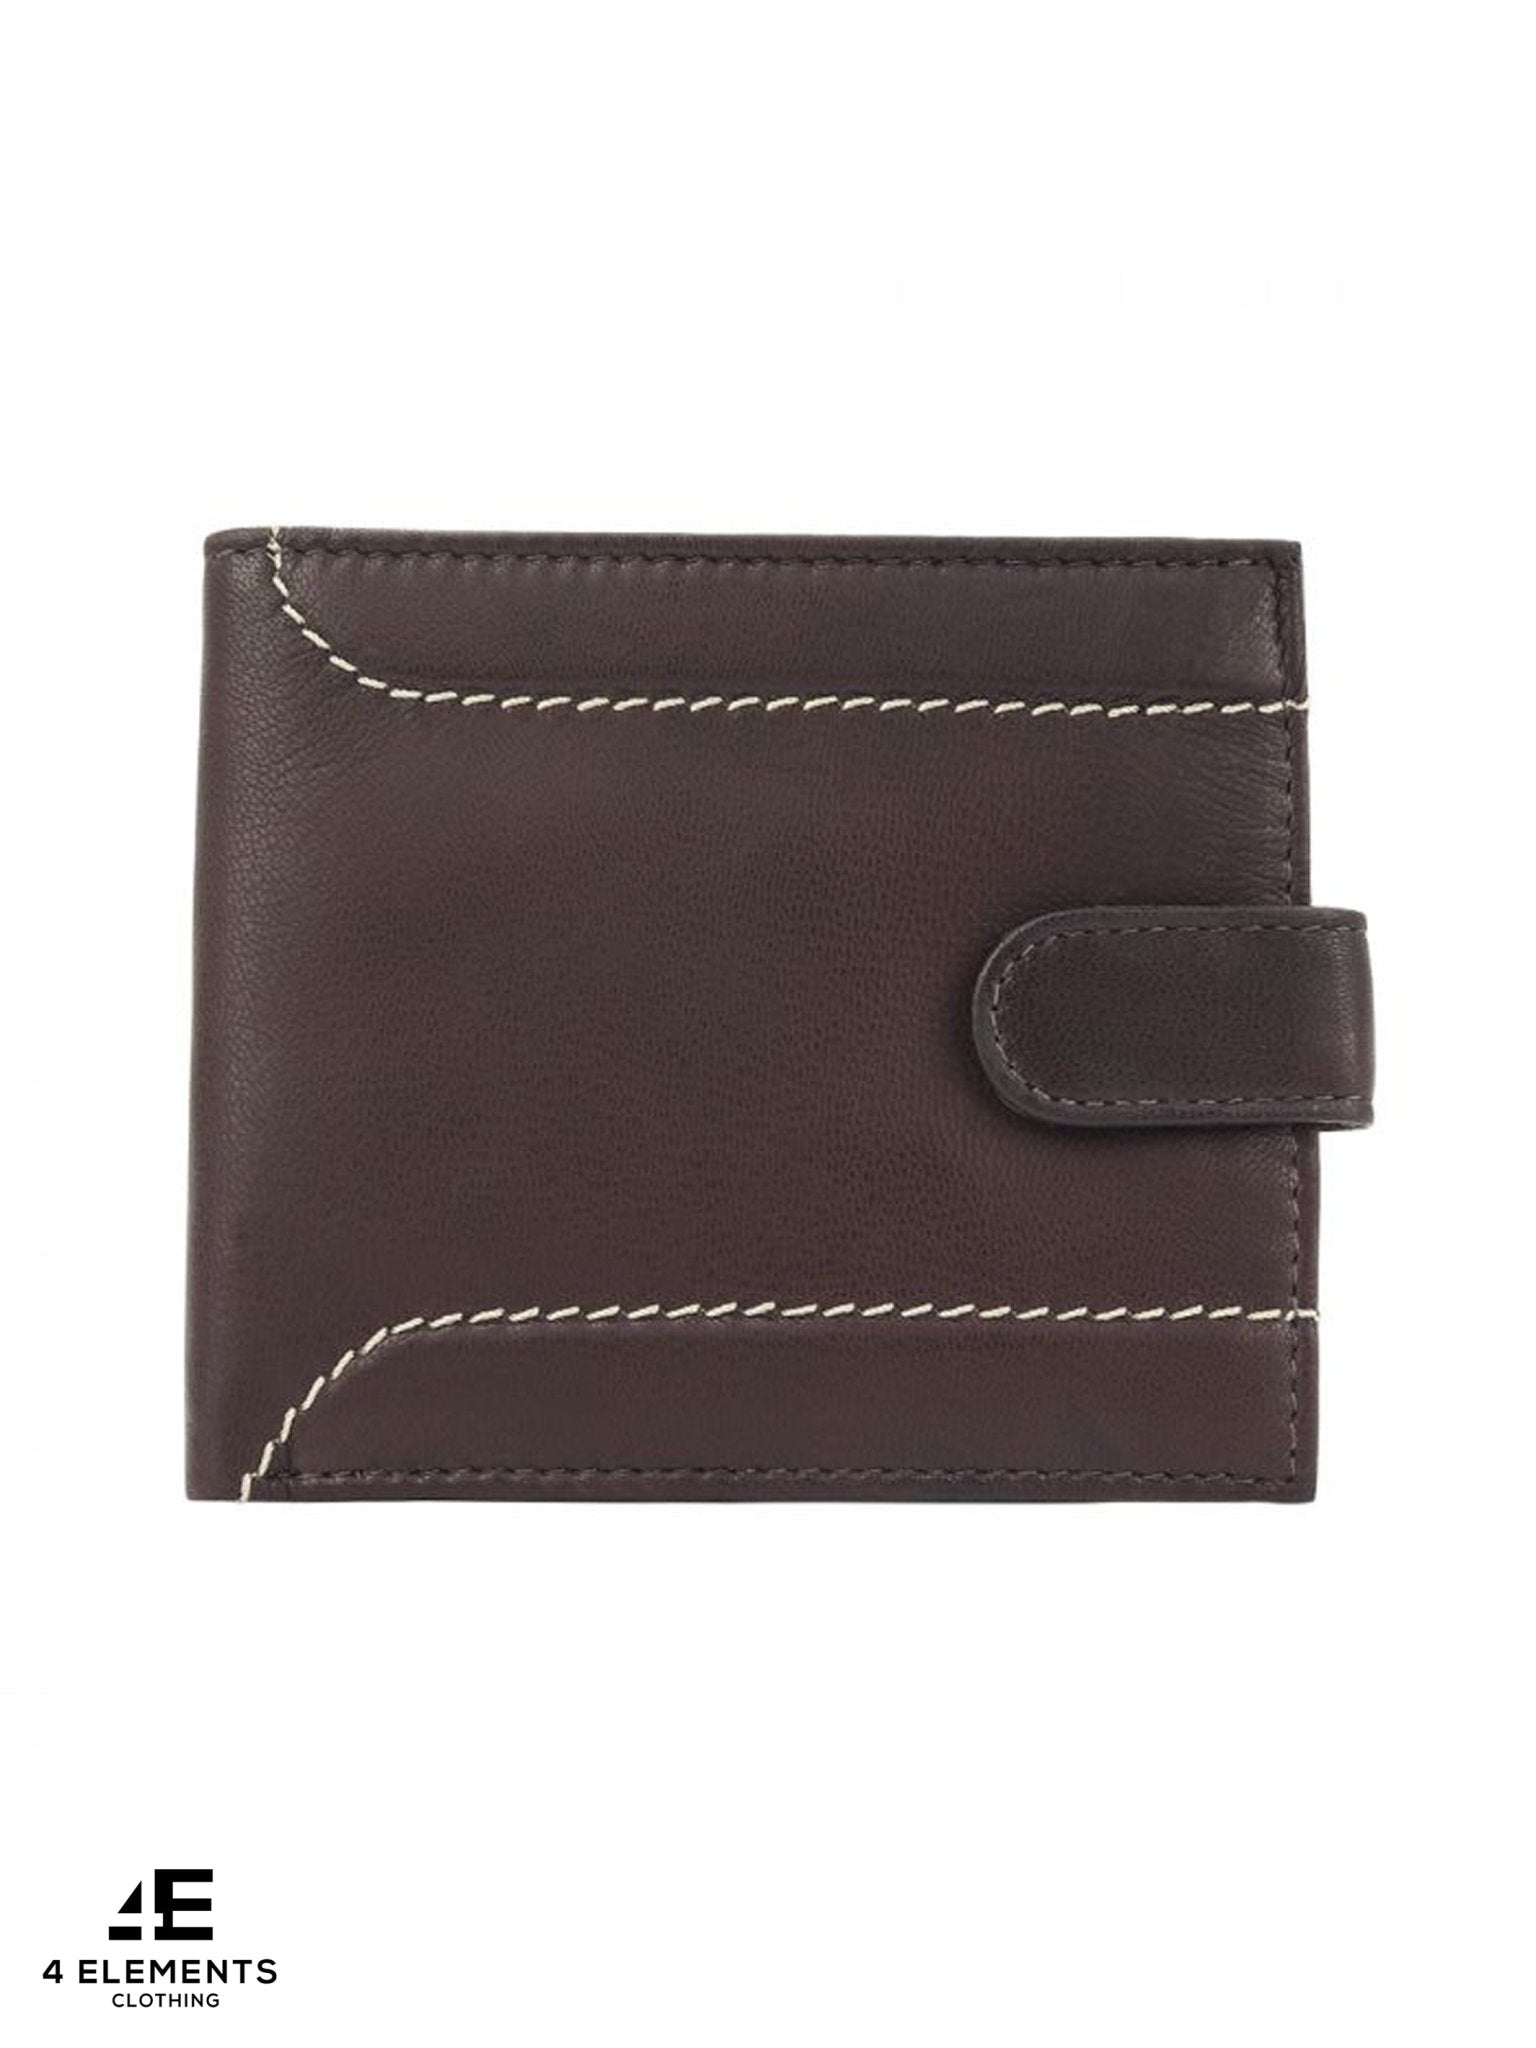 4elementsclothingThe British Bag CompanyThe British Bag Company - Leather Wallet with Padded EdgeBag710512